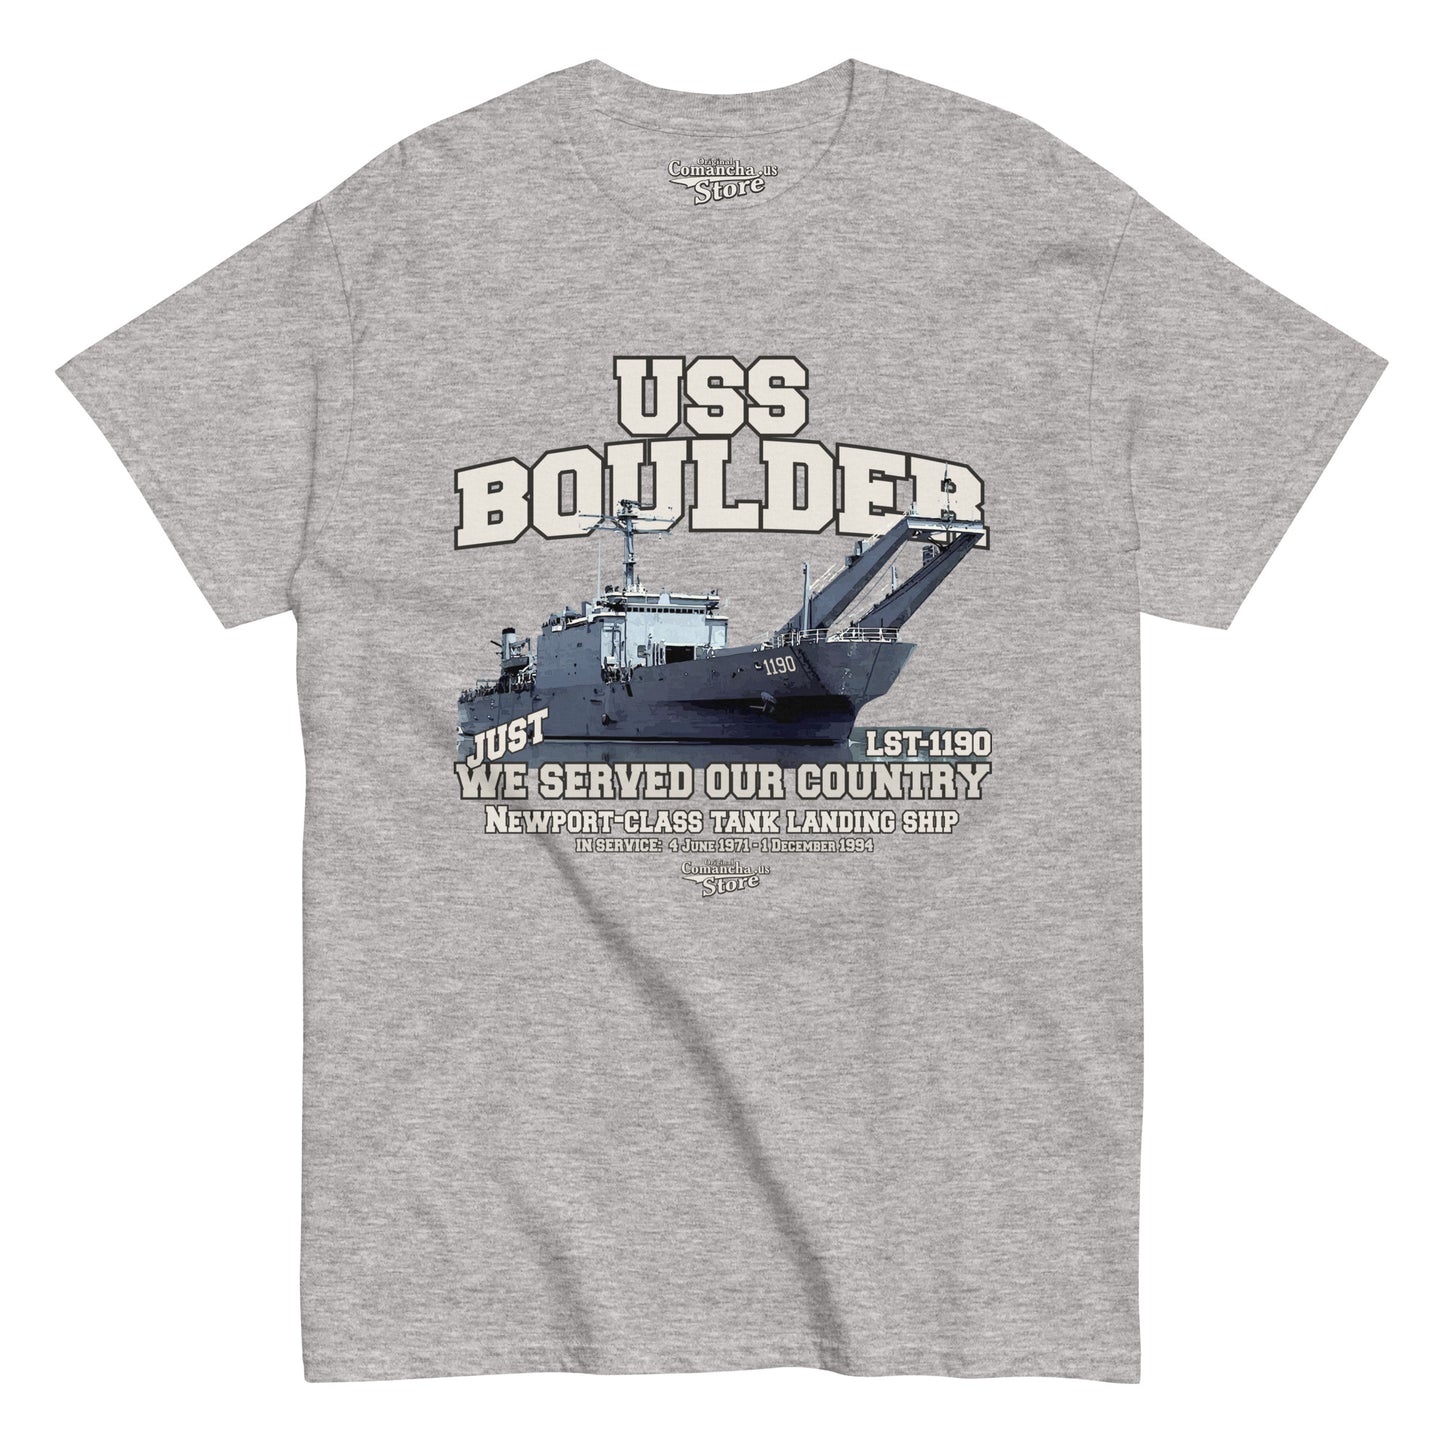 USS Boulder LST-1190 Shipmates t-shirt